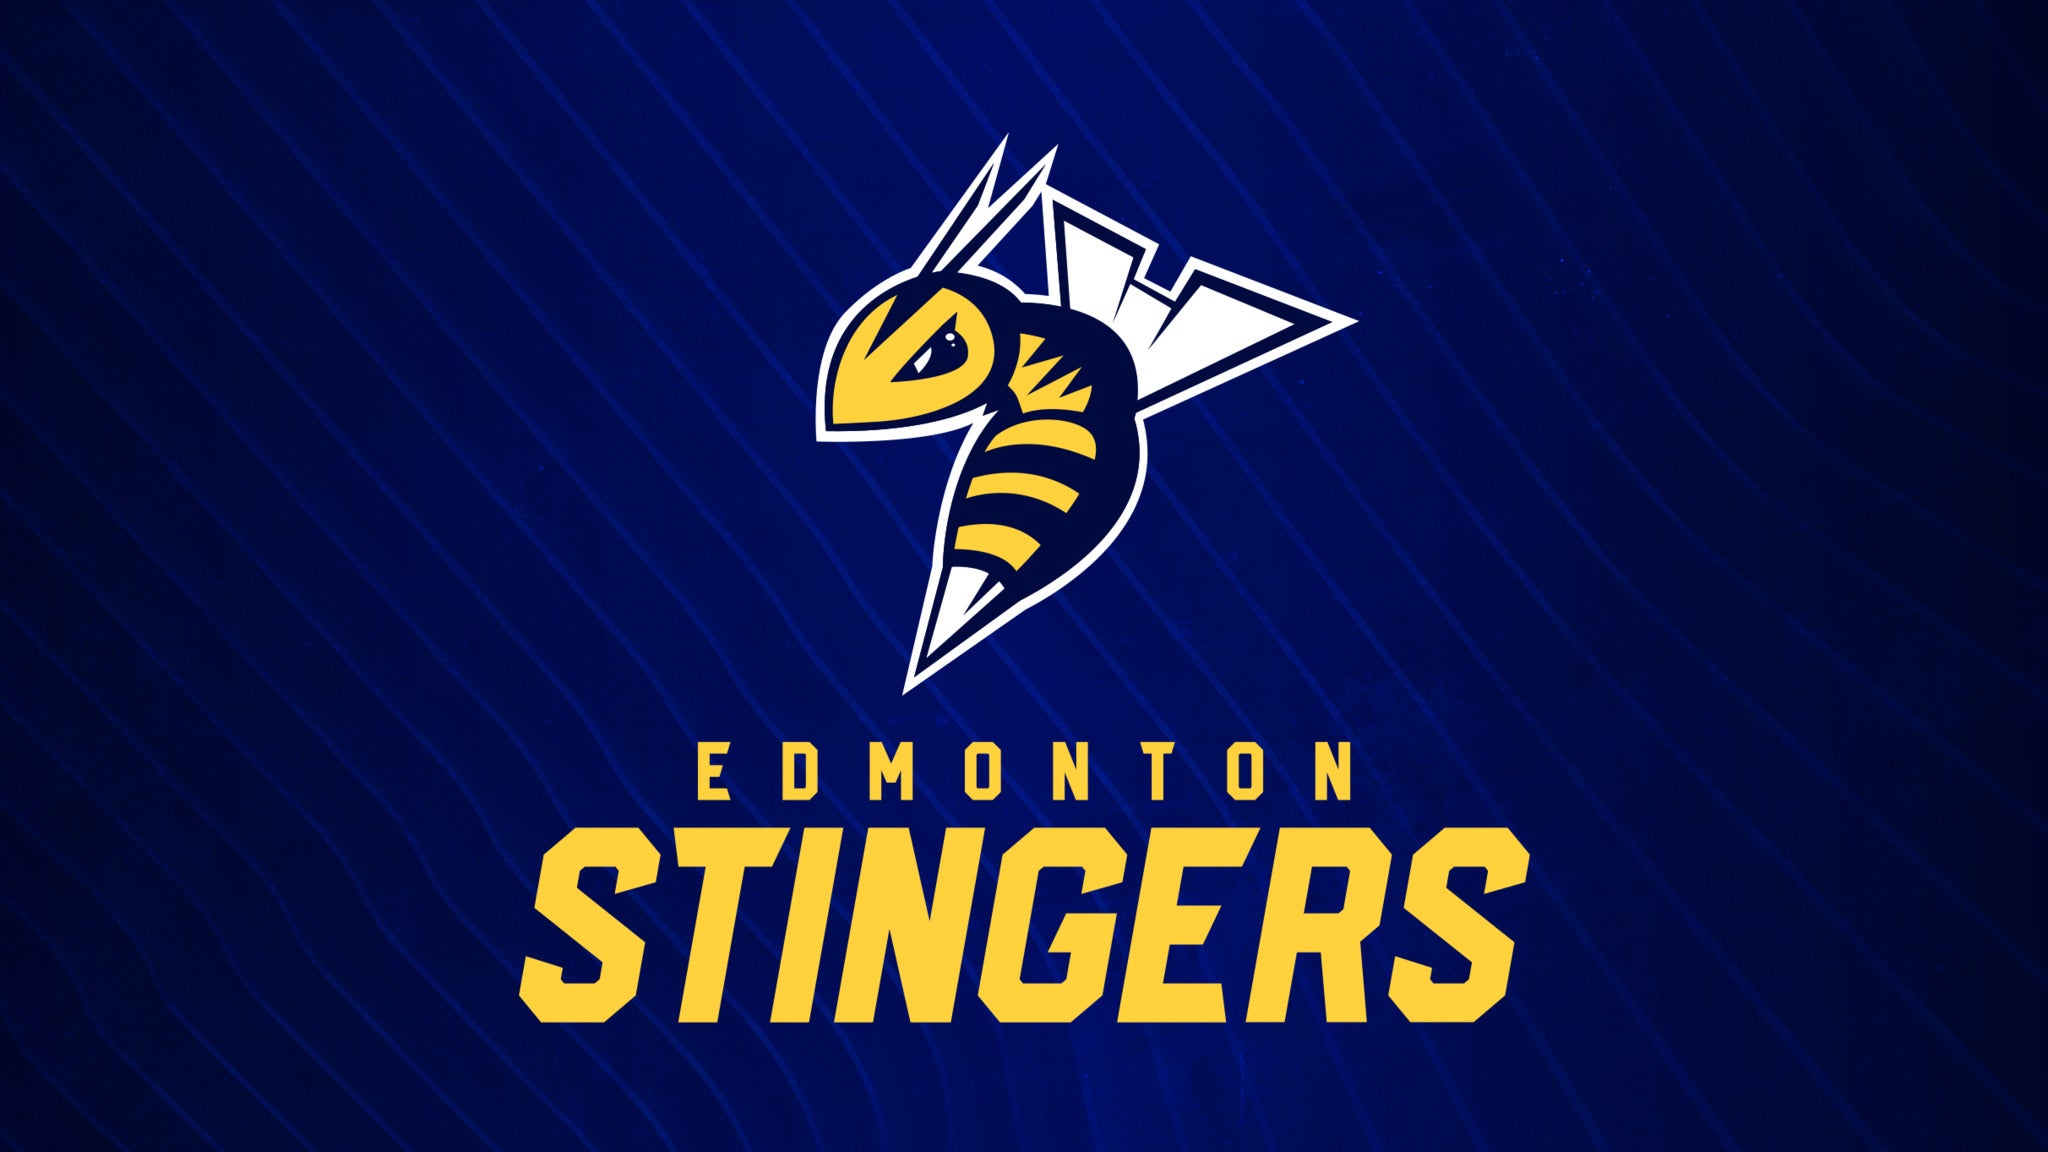 Edmonton Stingers vs. Niagara River Lions in Edmonton promo photo for Ticketmaster presale offer code